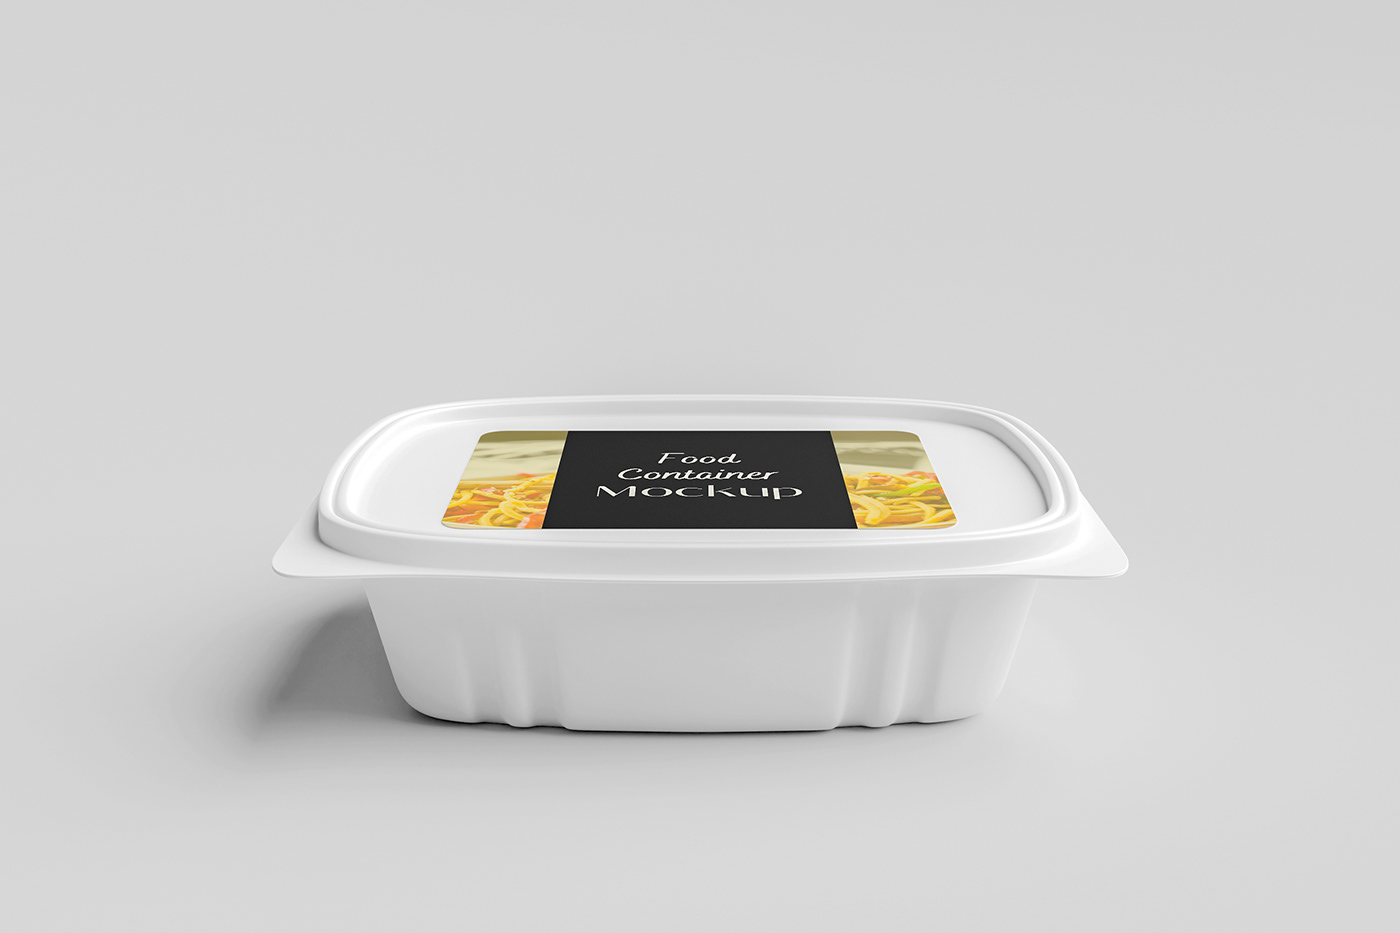 branding  cooking delivery Food  Label marketing   meal Mockup Packaging plastic